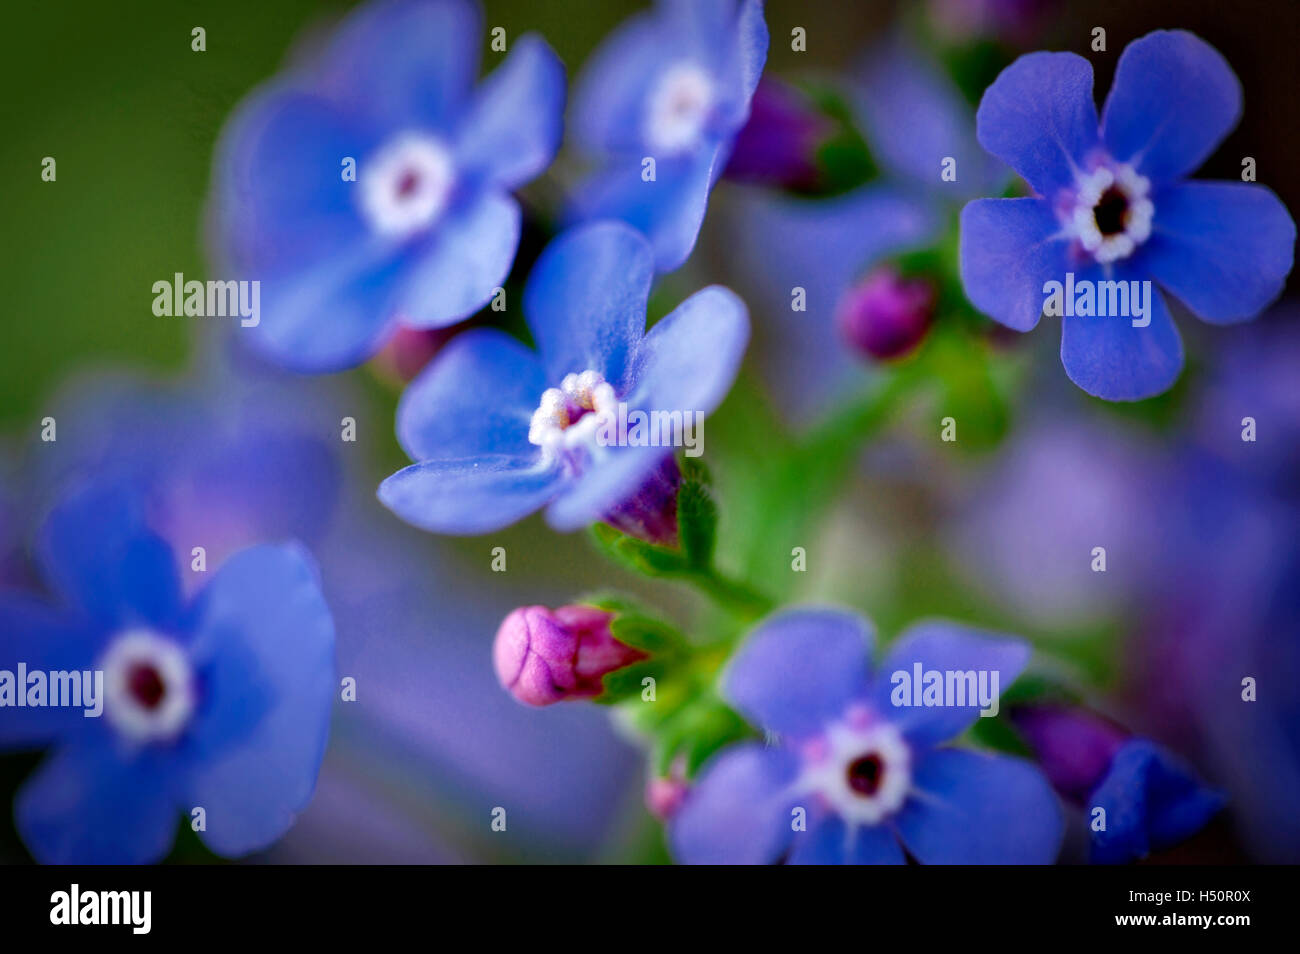 Flores de nomeolvides fotografías e imágenes de alta resolución - Alamy